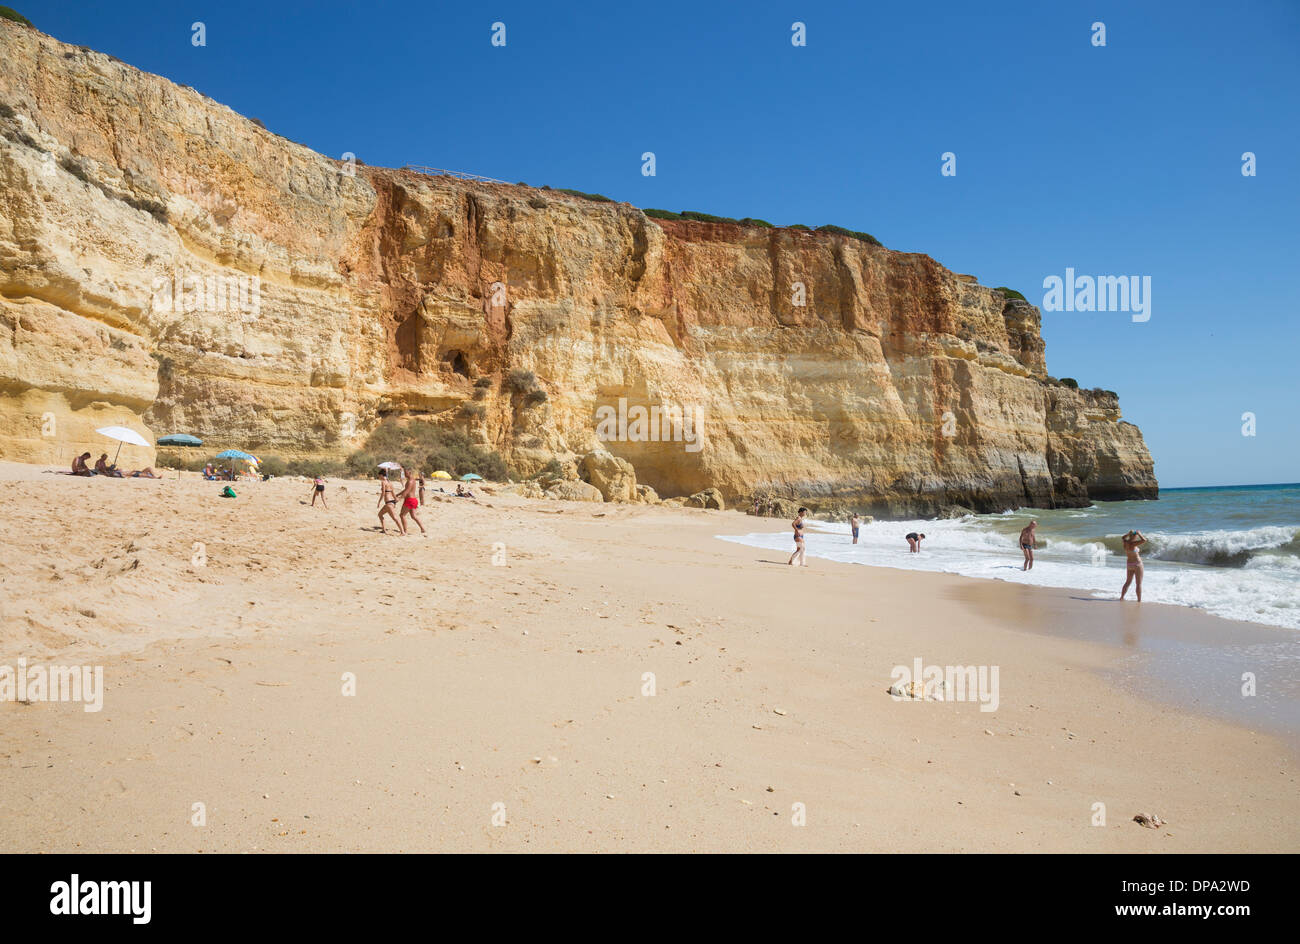 Praia de Benagil, The Algarve, Portugal Stock Photo